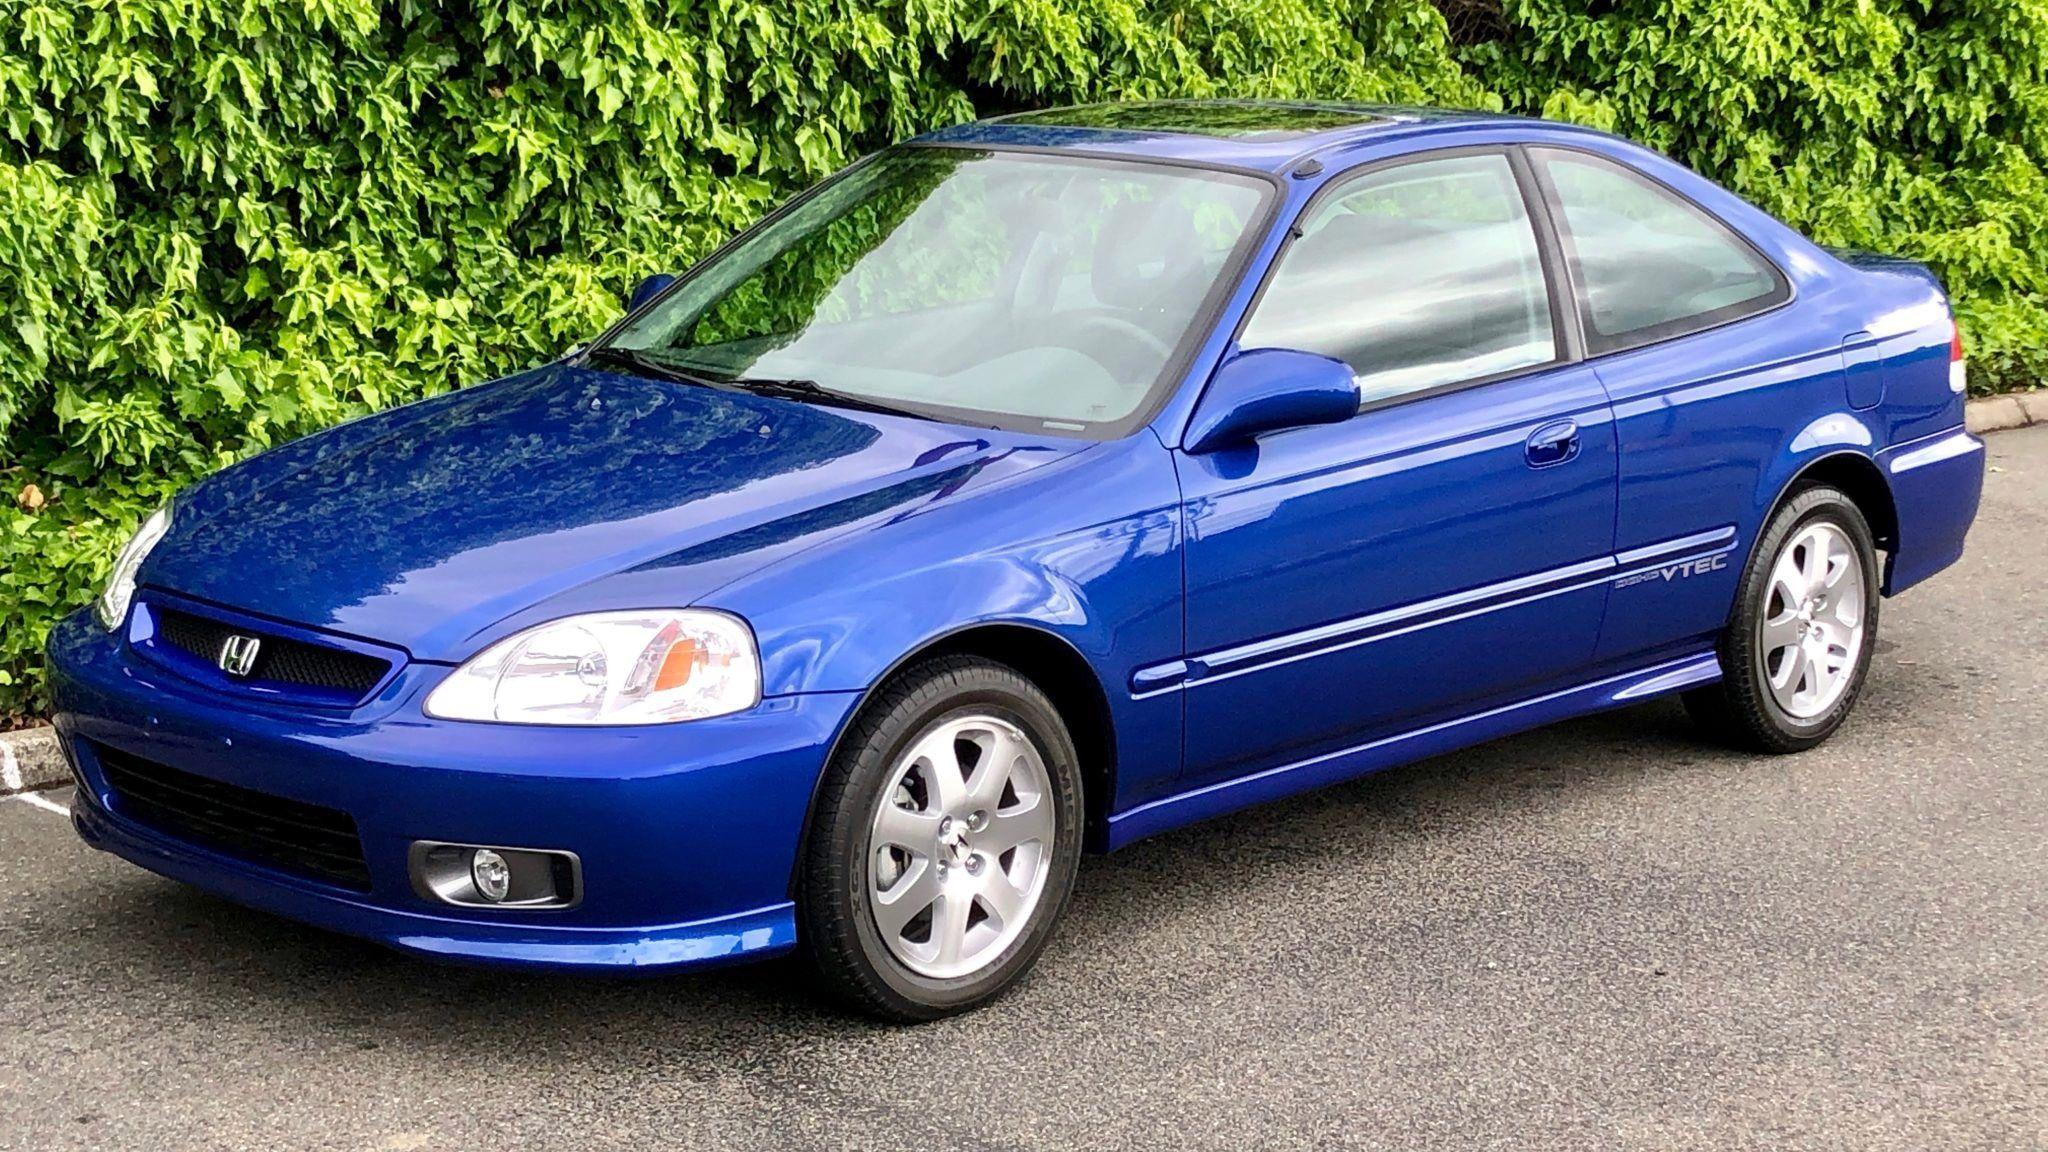 Honda civic 2000 года. Honda Civic si Coupe 2000. Honda Civic 2000. Honda Civic si 2000 купе. Honda Civic 2000 седан.